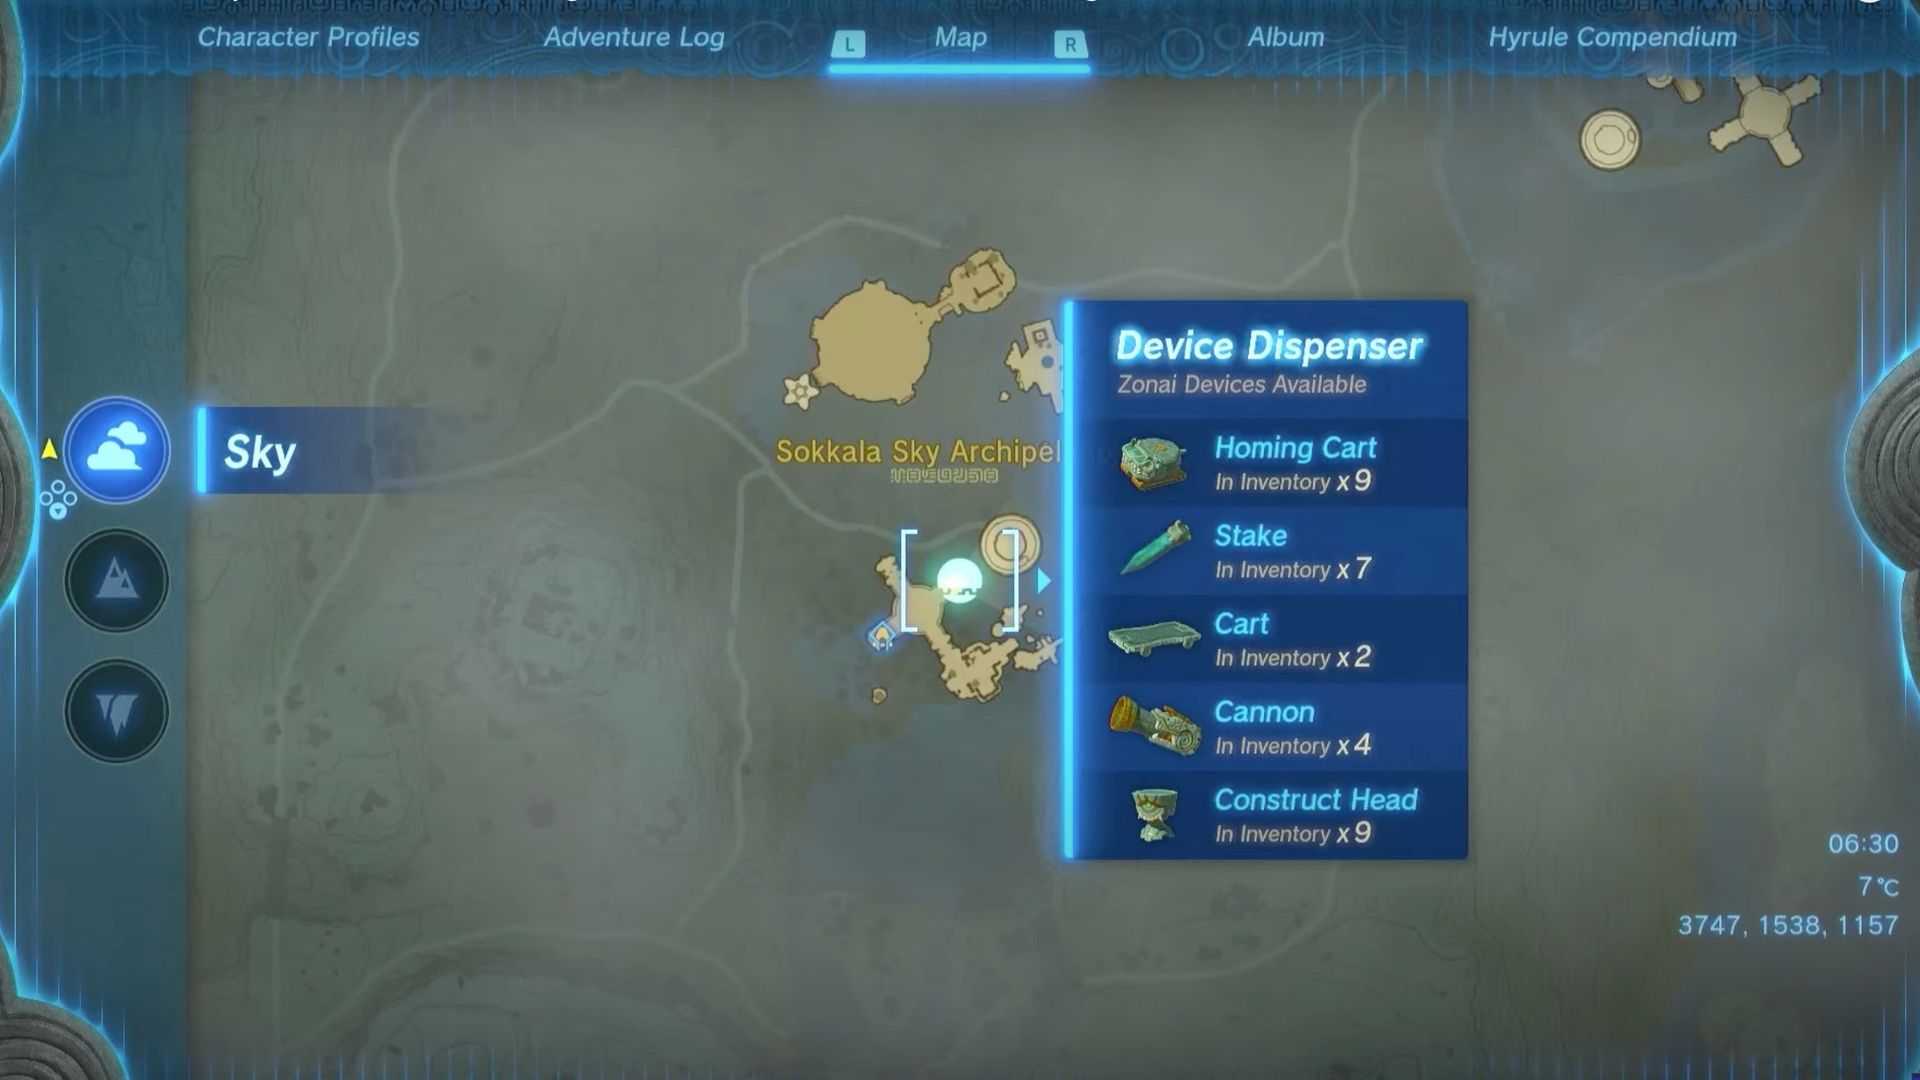 Map showing device dispenser items in Zelda TOTK